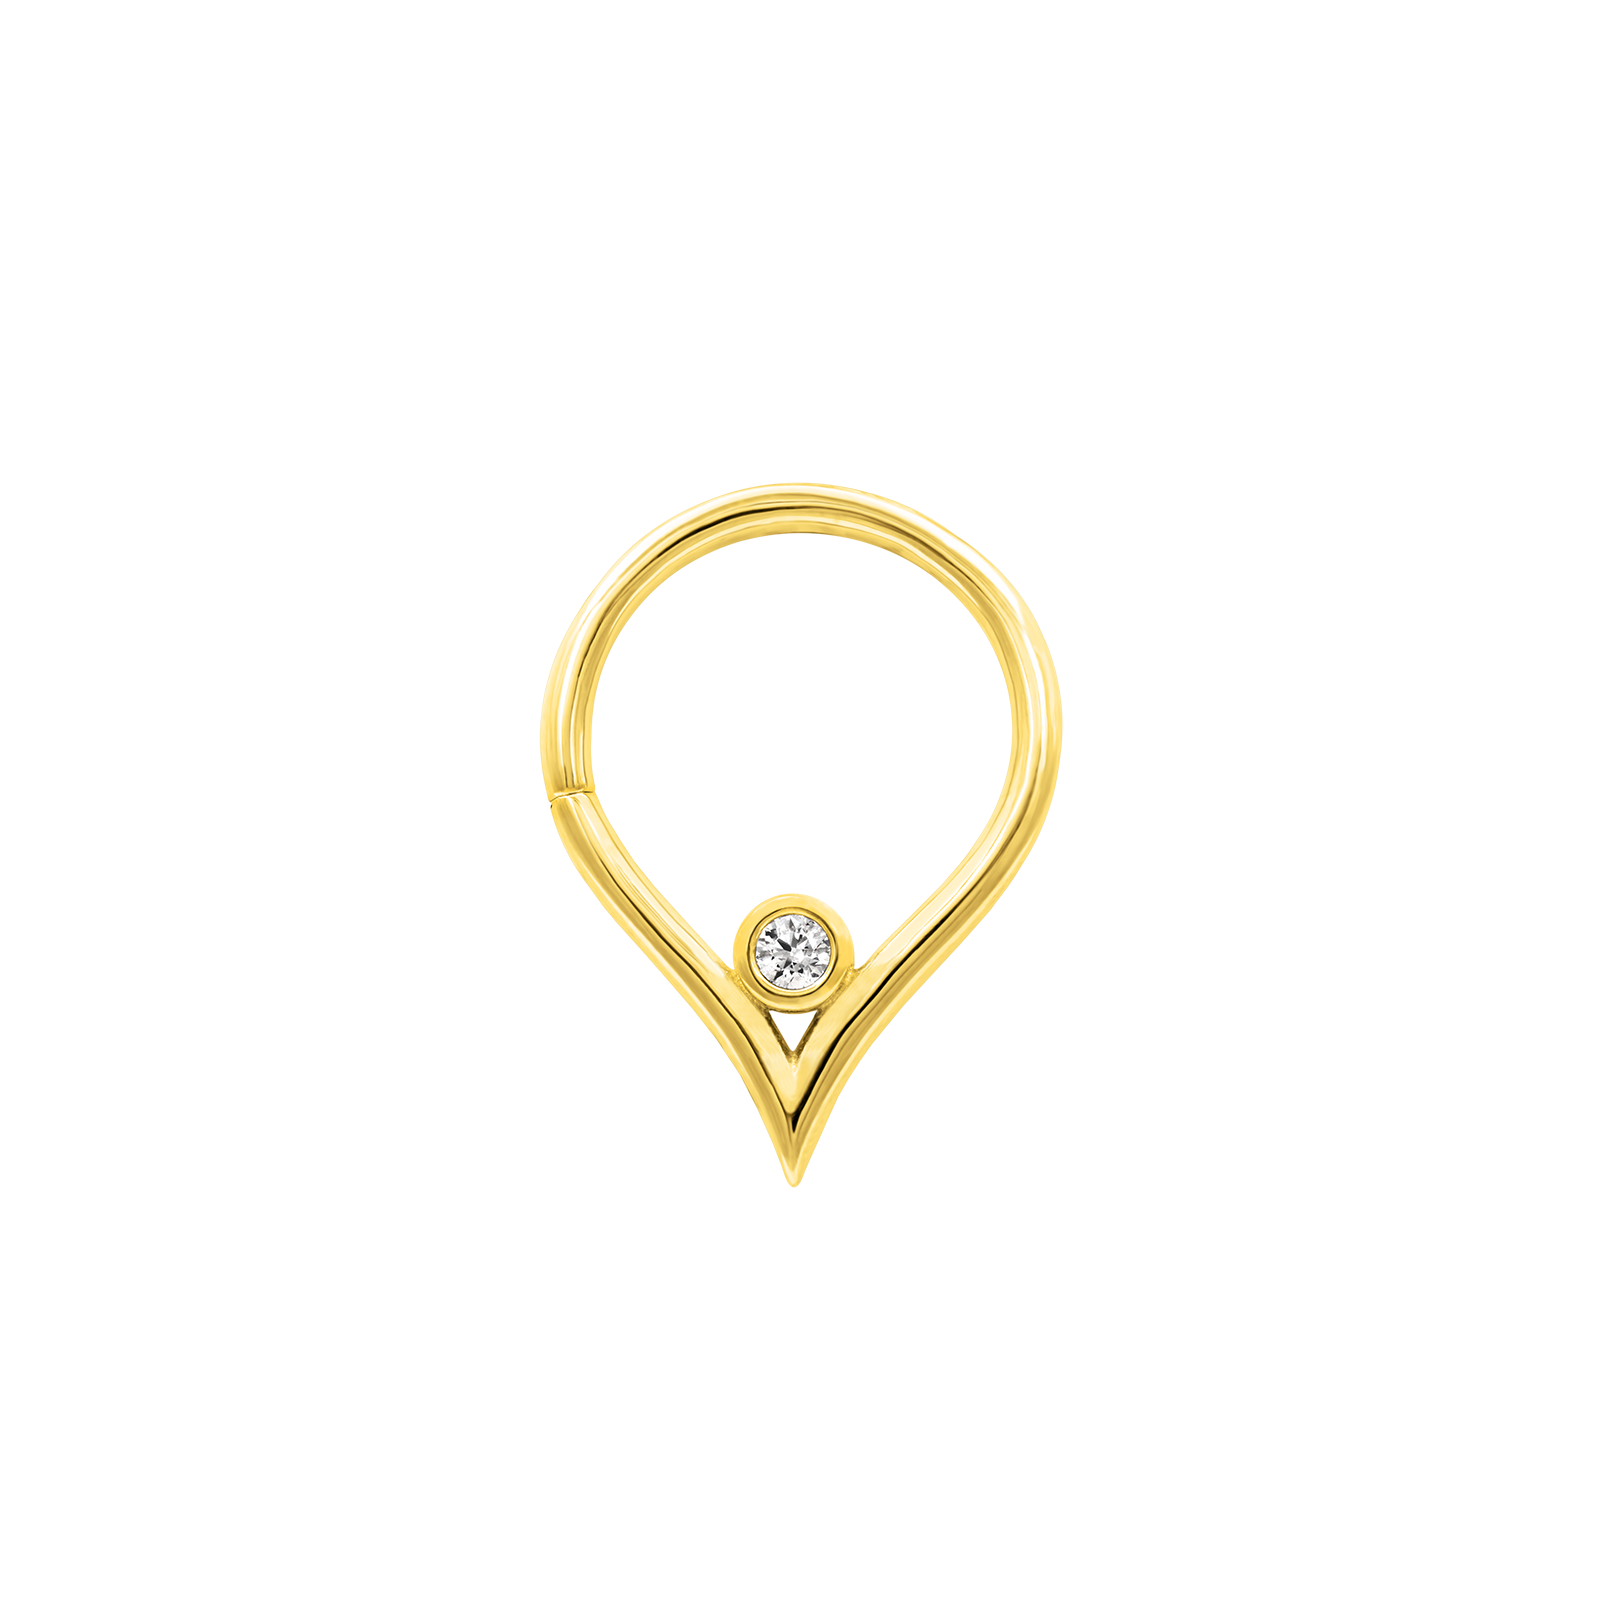 Susie Seam Ring in Solid 14k Gold by Junipurr